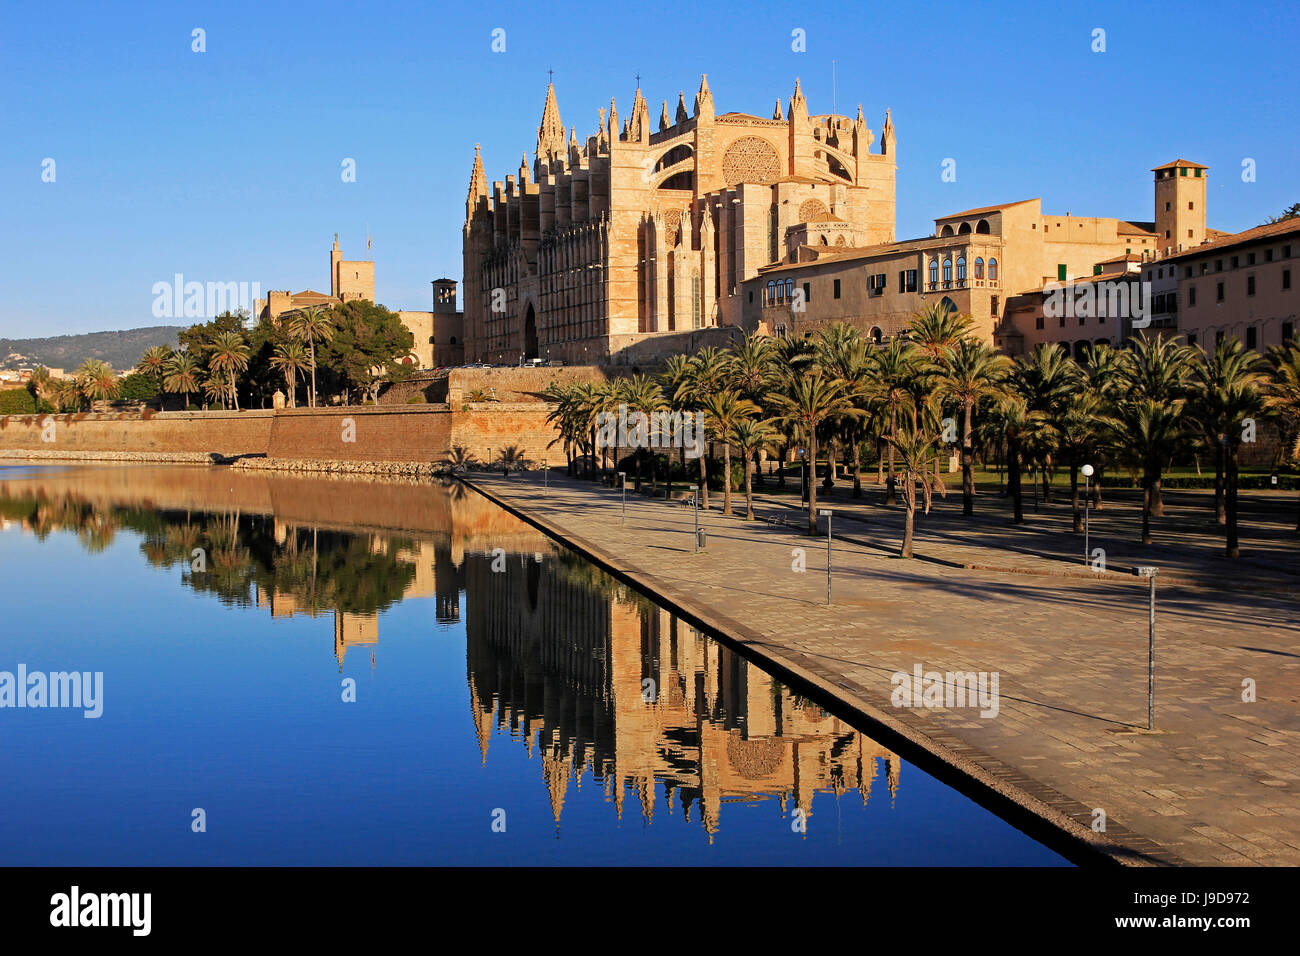 Parc de la Mar, Cathedral La Seu, Palma de Mallorca, Majorca, Balearic Islands, Spain, Mediterranean, Europe Stock Photo